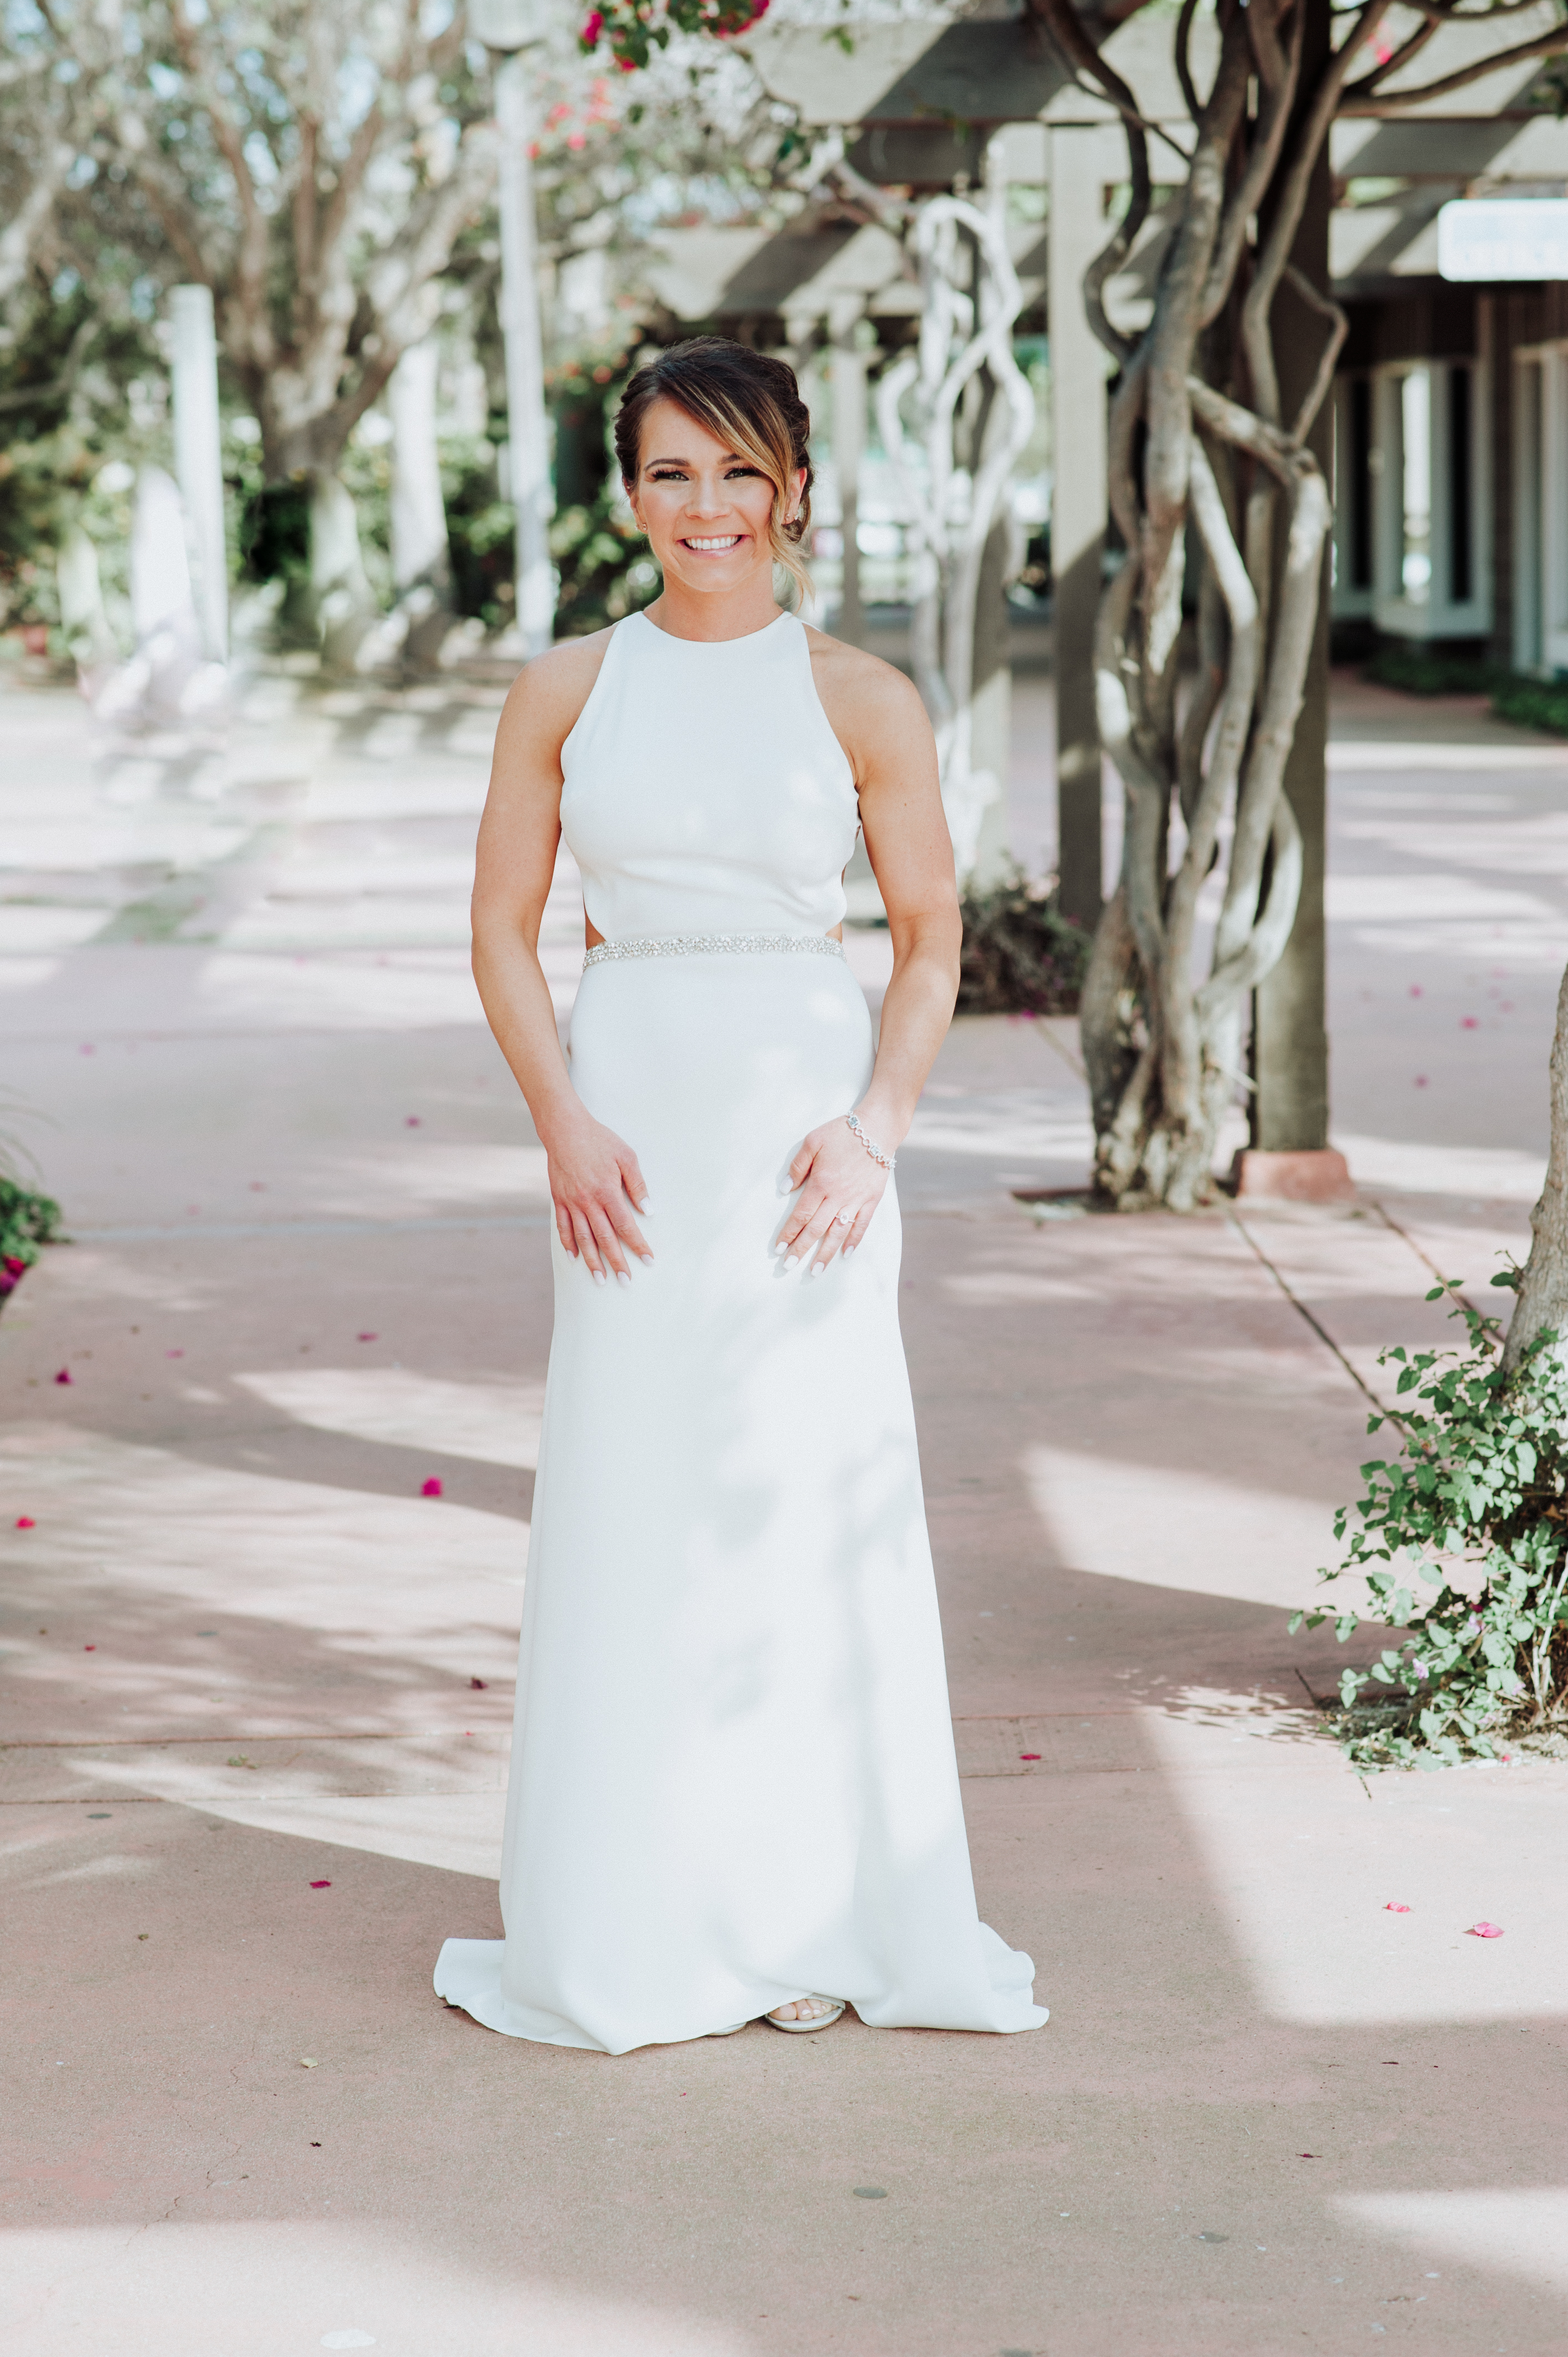 Bridal portraitsat a Romantic Style San Diego Wedding at Marina Village by Kylie Rae Photography